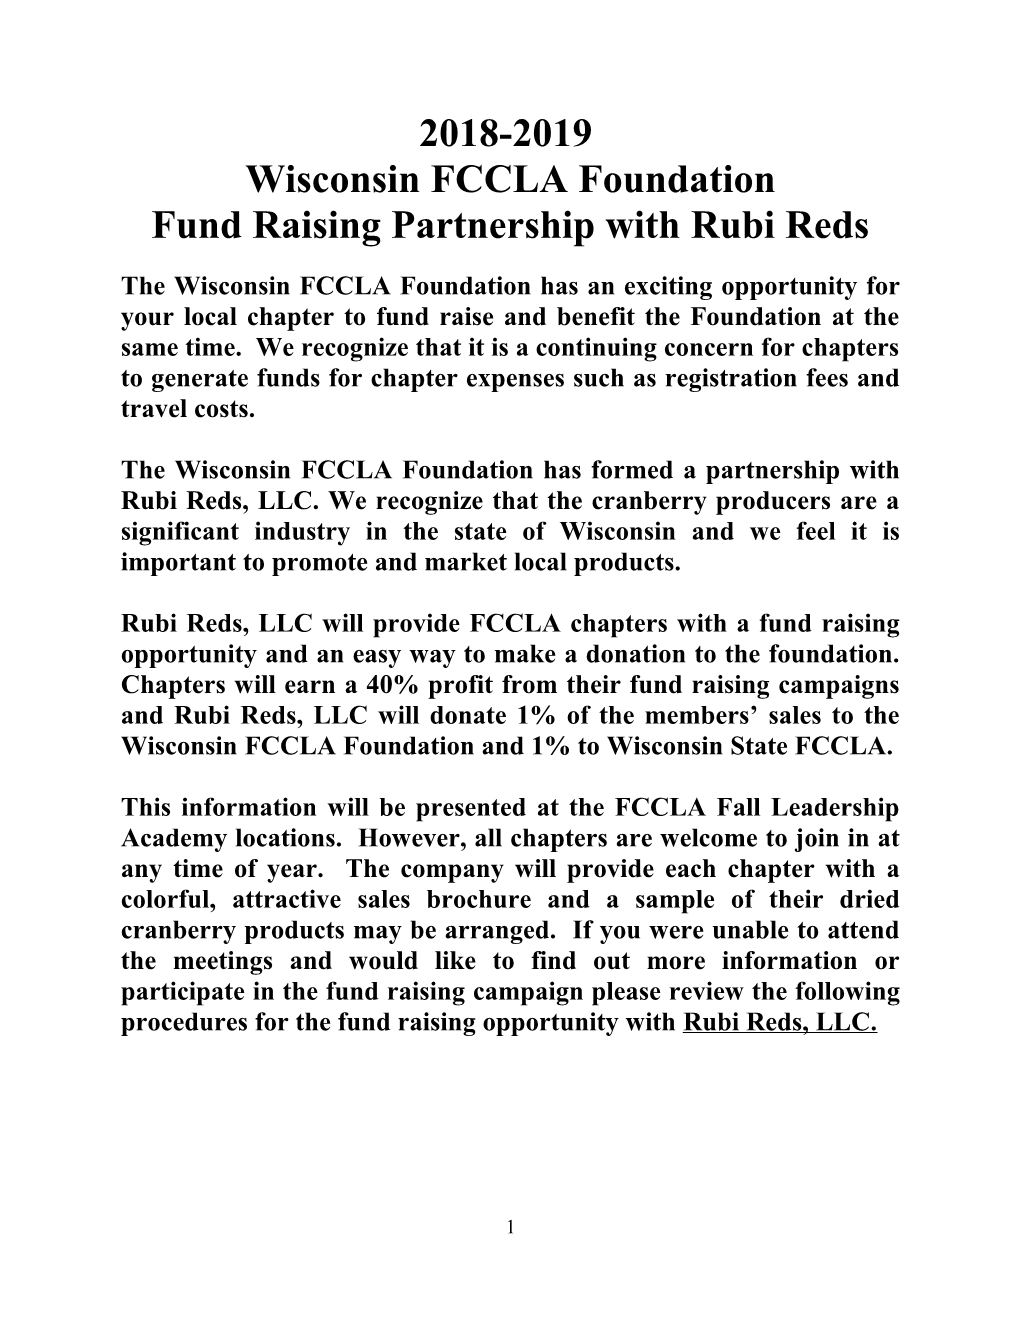 Wisconsin FCCLA Foundation Fundraiser Partnership with Rubi Reds Flyer